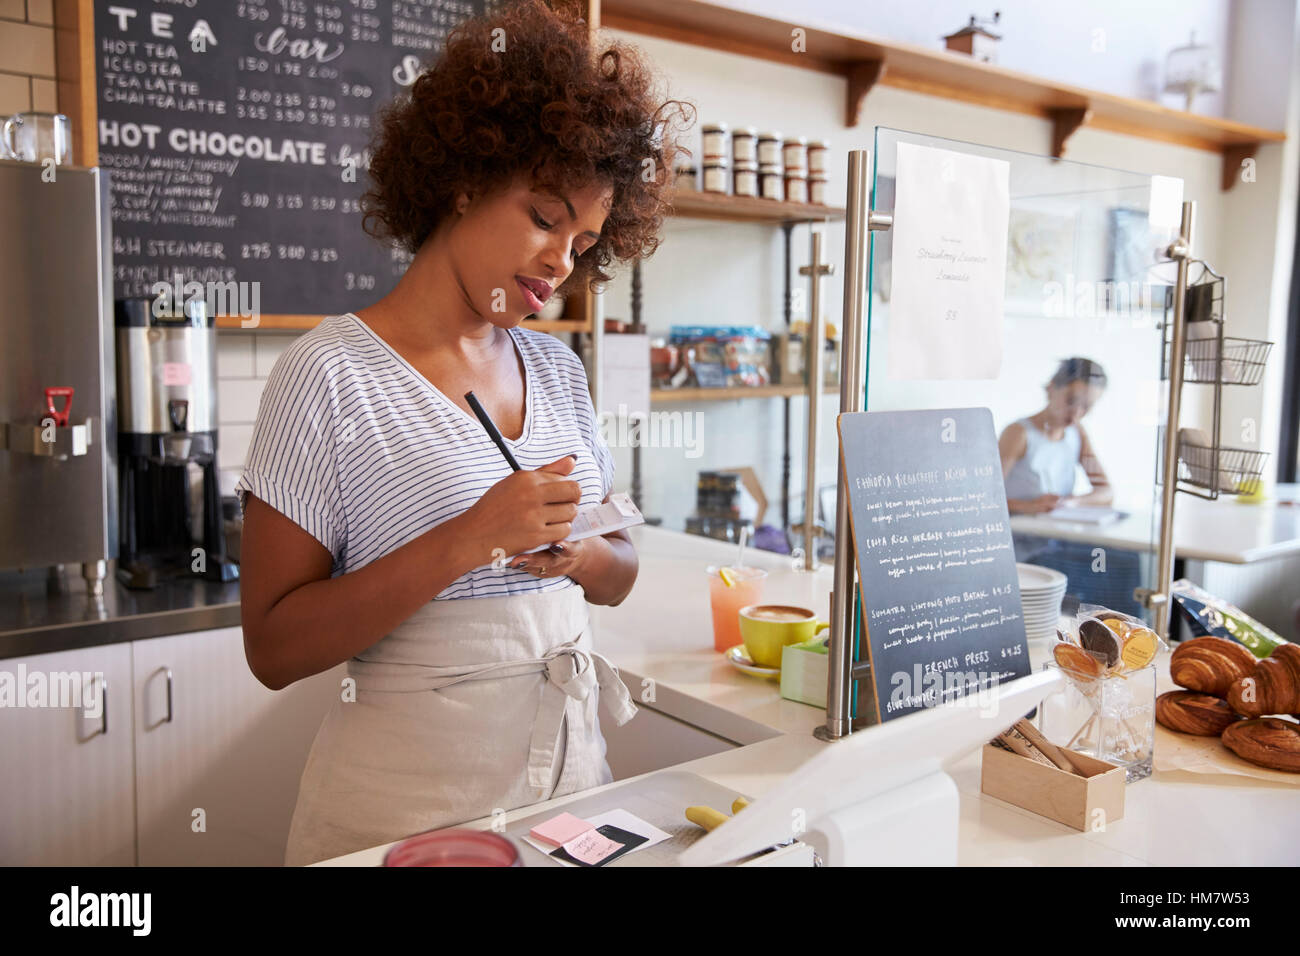 Waitress writing down an order at a coffee shop, close up Stock Photo